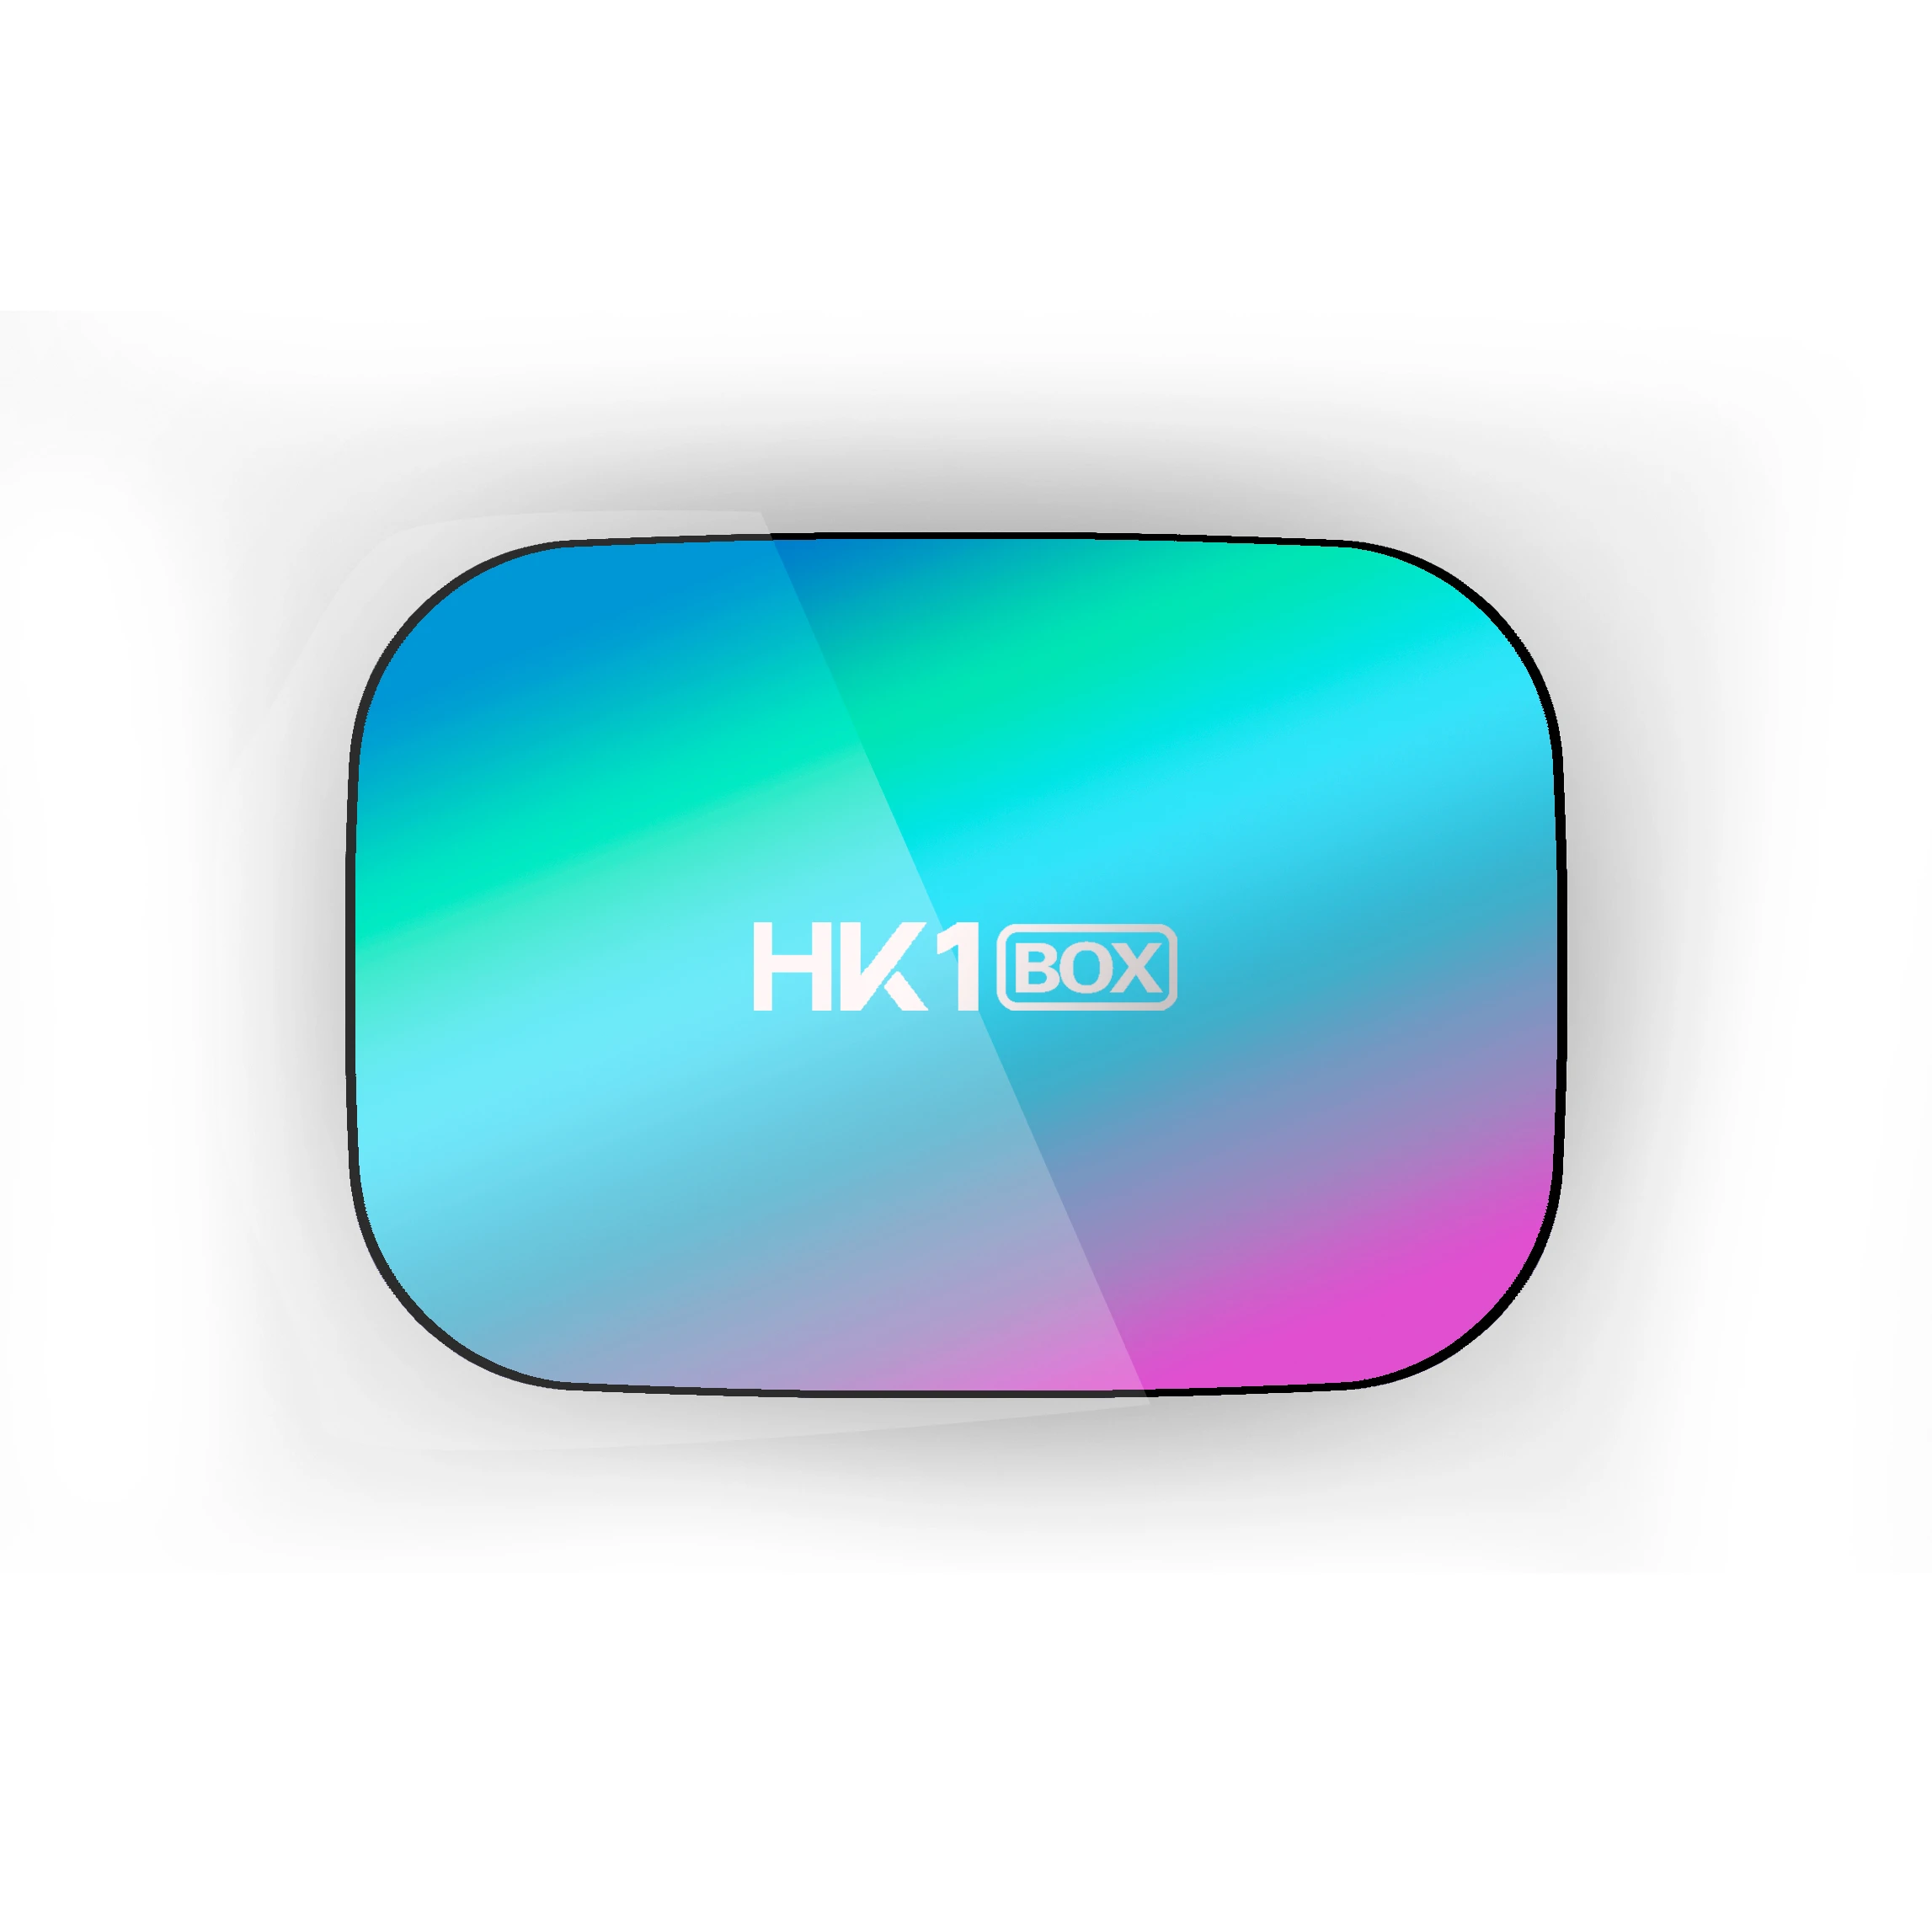 

HK1 BOX 4GB 128GB 8K Amlogi S905X3 Smart TV BOX Android 9.0 Dual Wifi 1080P 4K Youtube IPTV media player Android TV Box